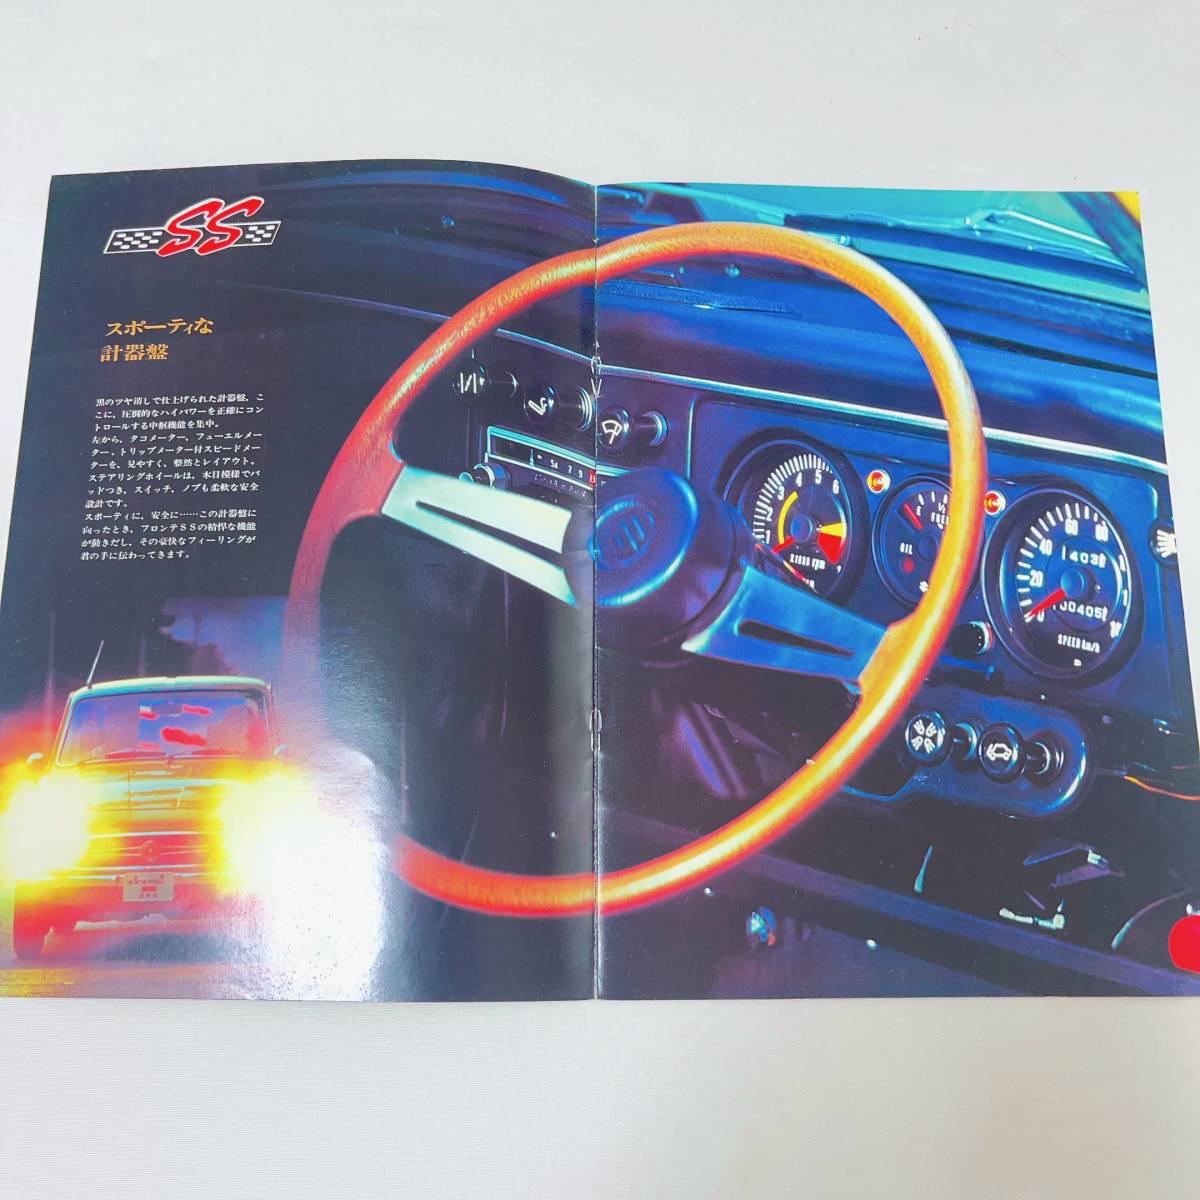  Suzuki Fronte SS каталог 12 страница превосходный товар 